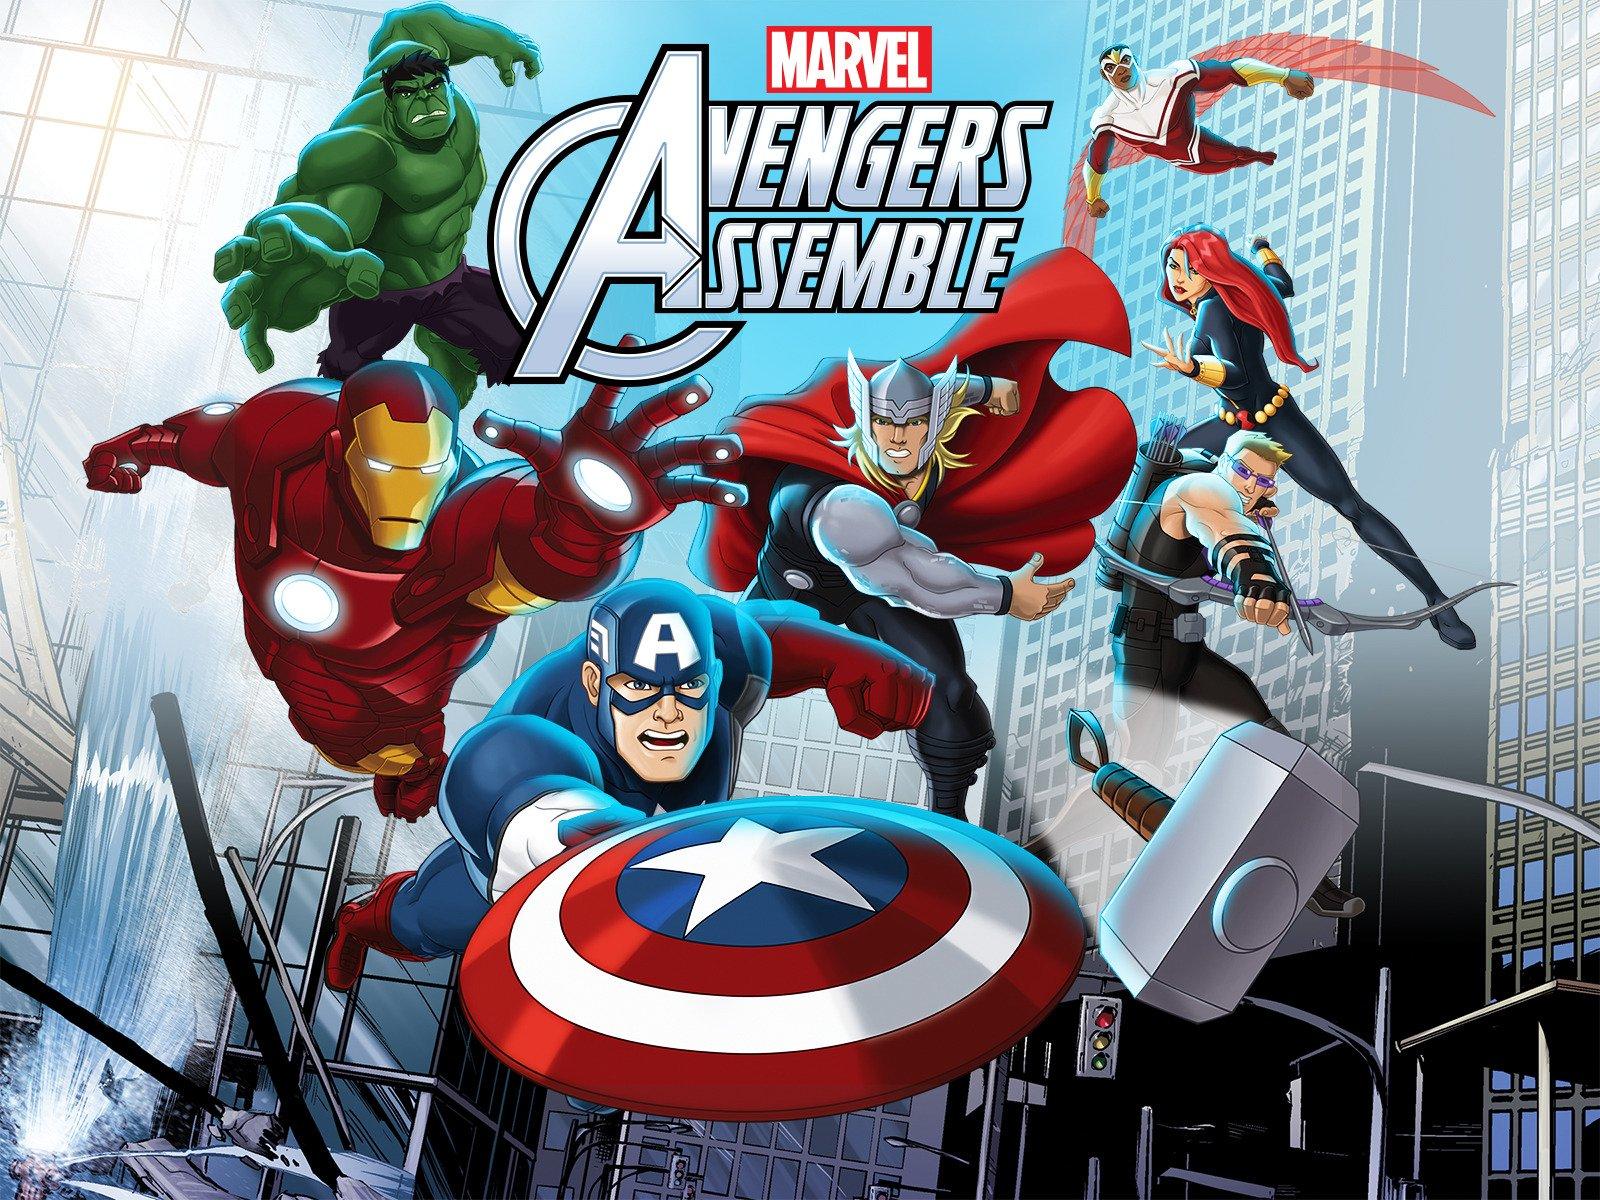 Amazon.co.uk: Watch Marvel's Avengers Assemble 2